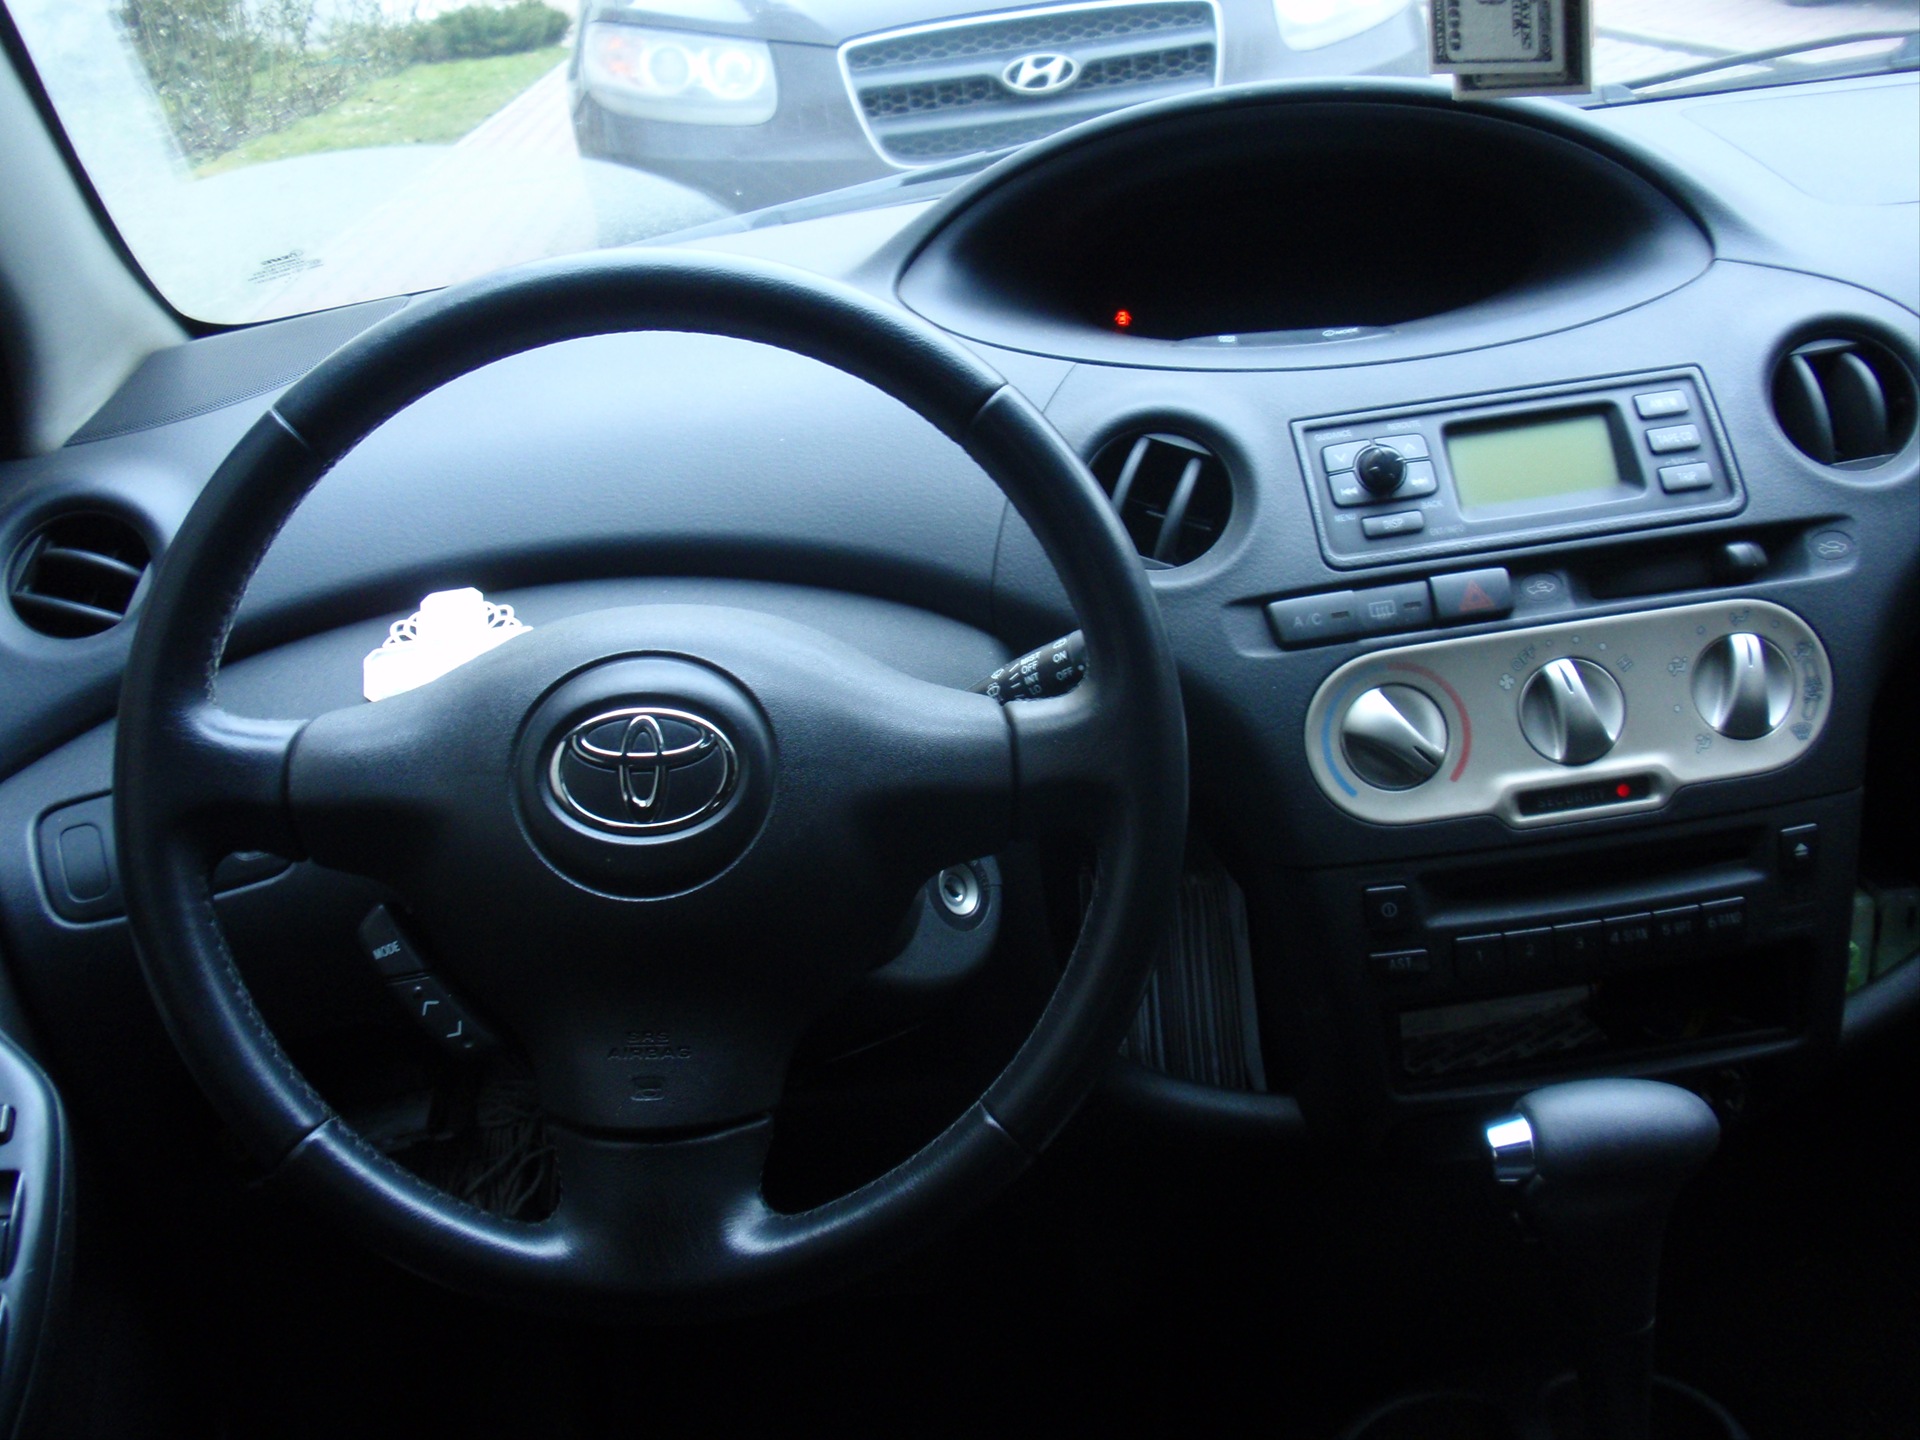 Leather interior - Toyota Yaris 13L 2003